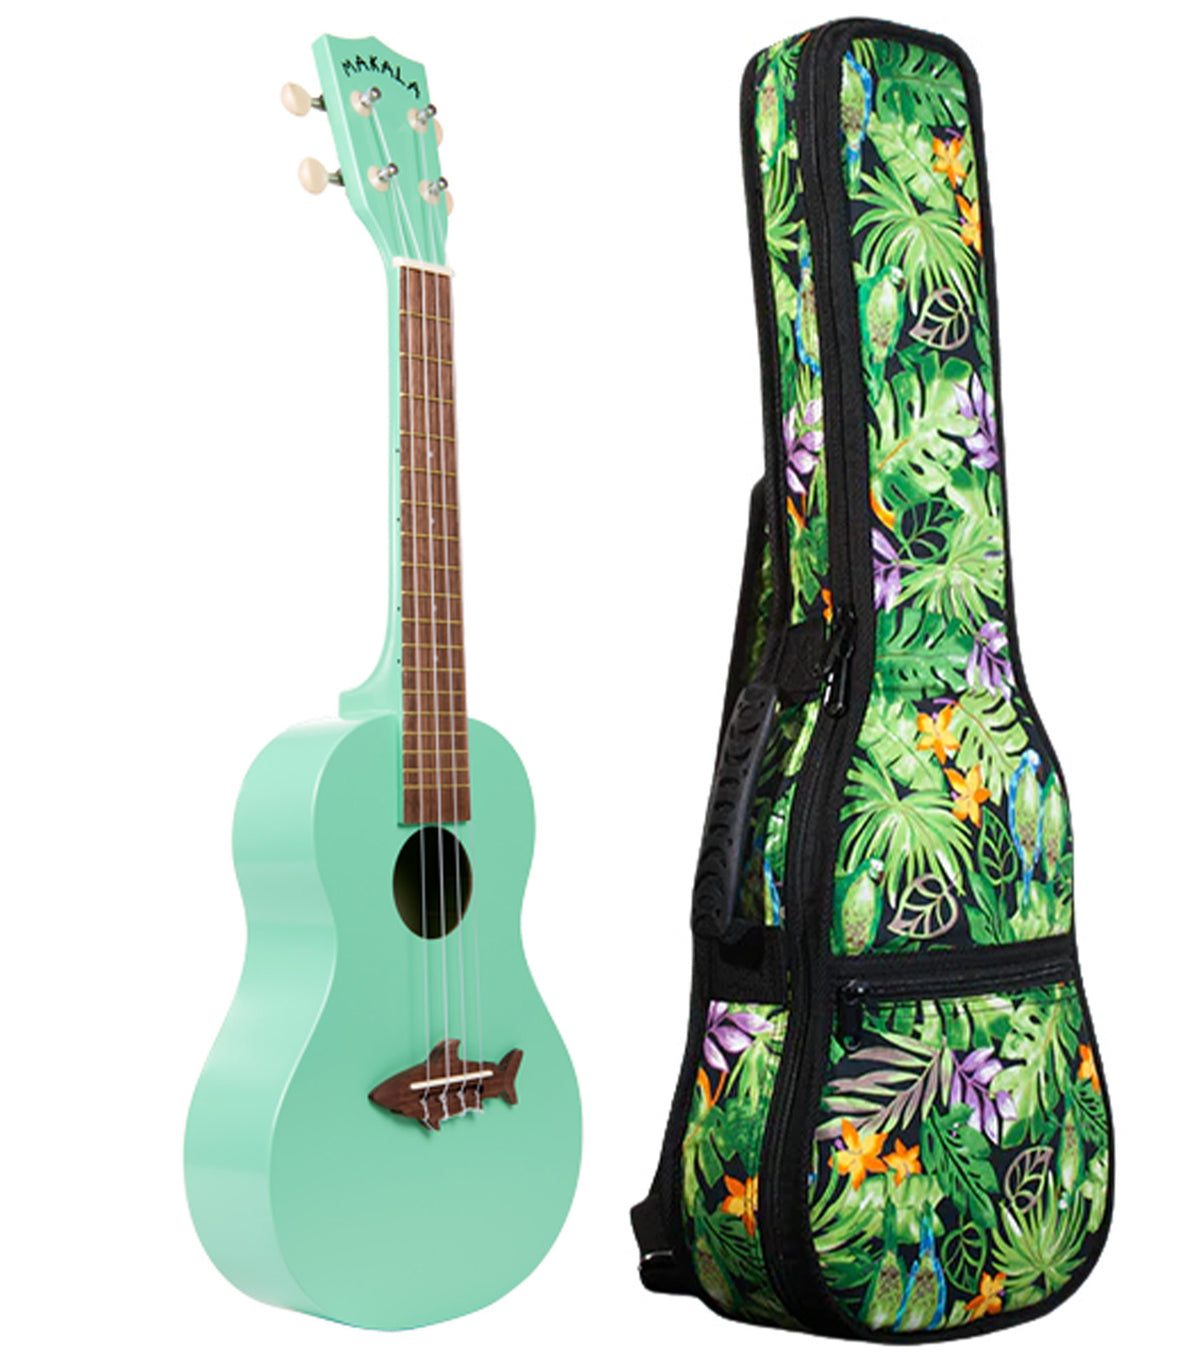 MK-CS/GRN Green Concert Shark Ukelele Includes Gigbag Floral Print, Padded with Backpack Straps